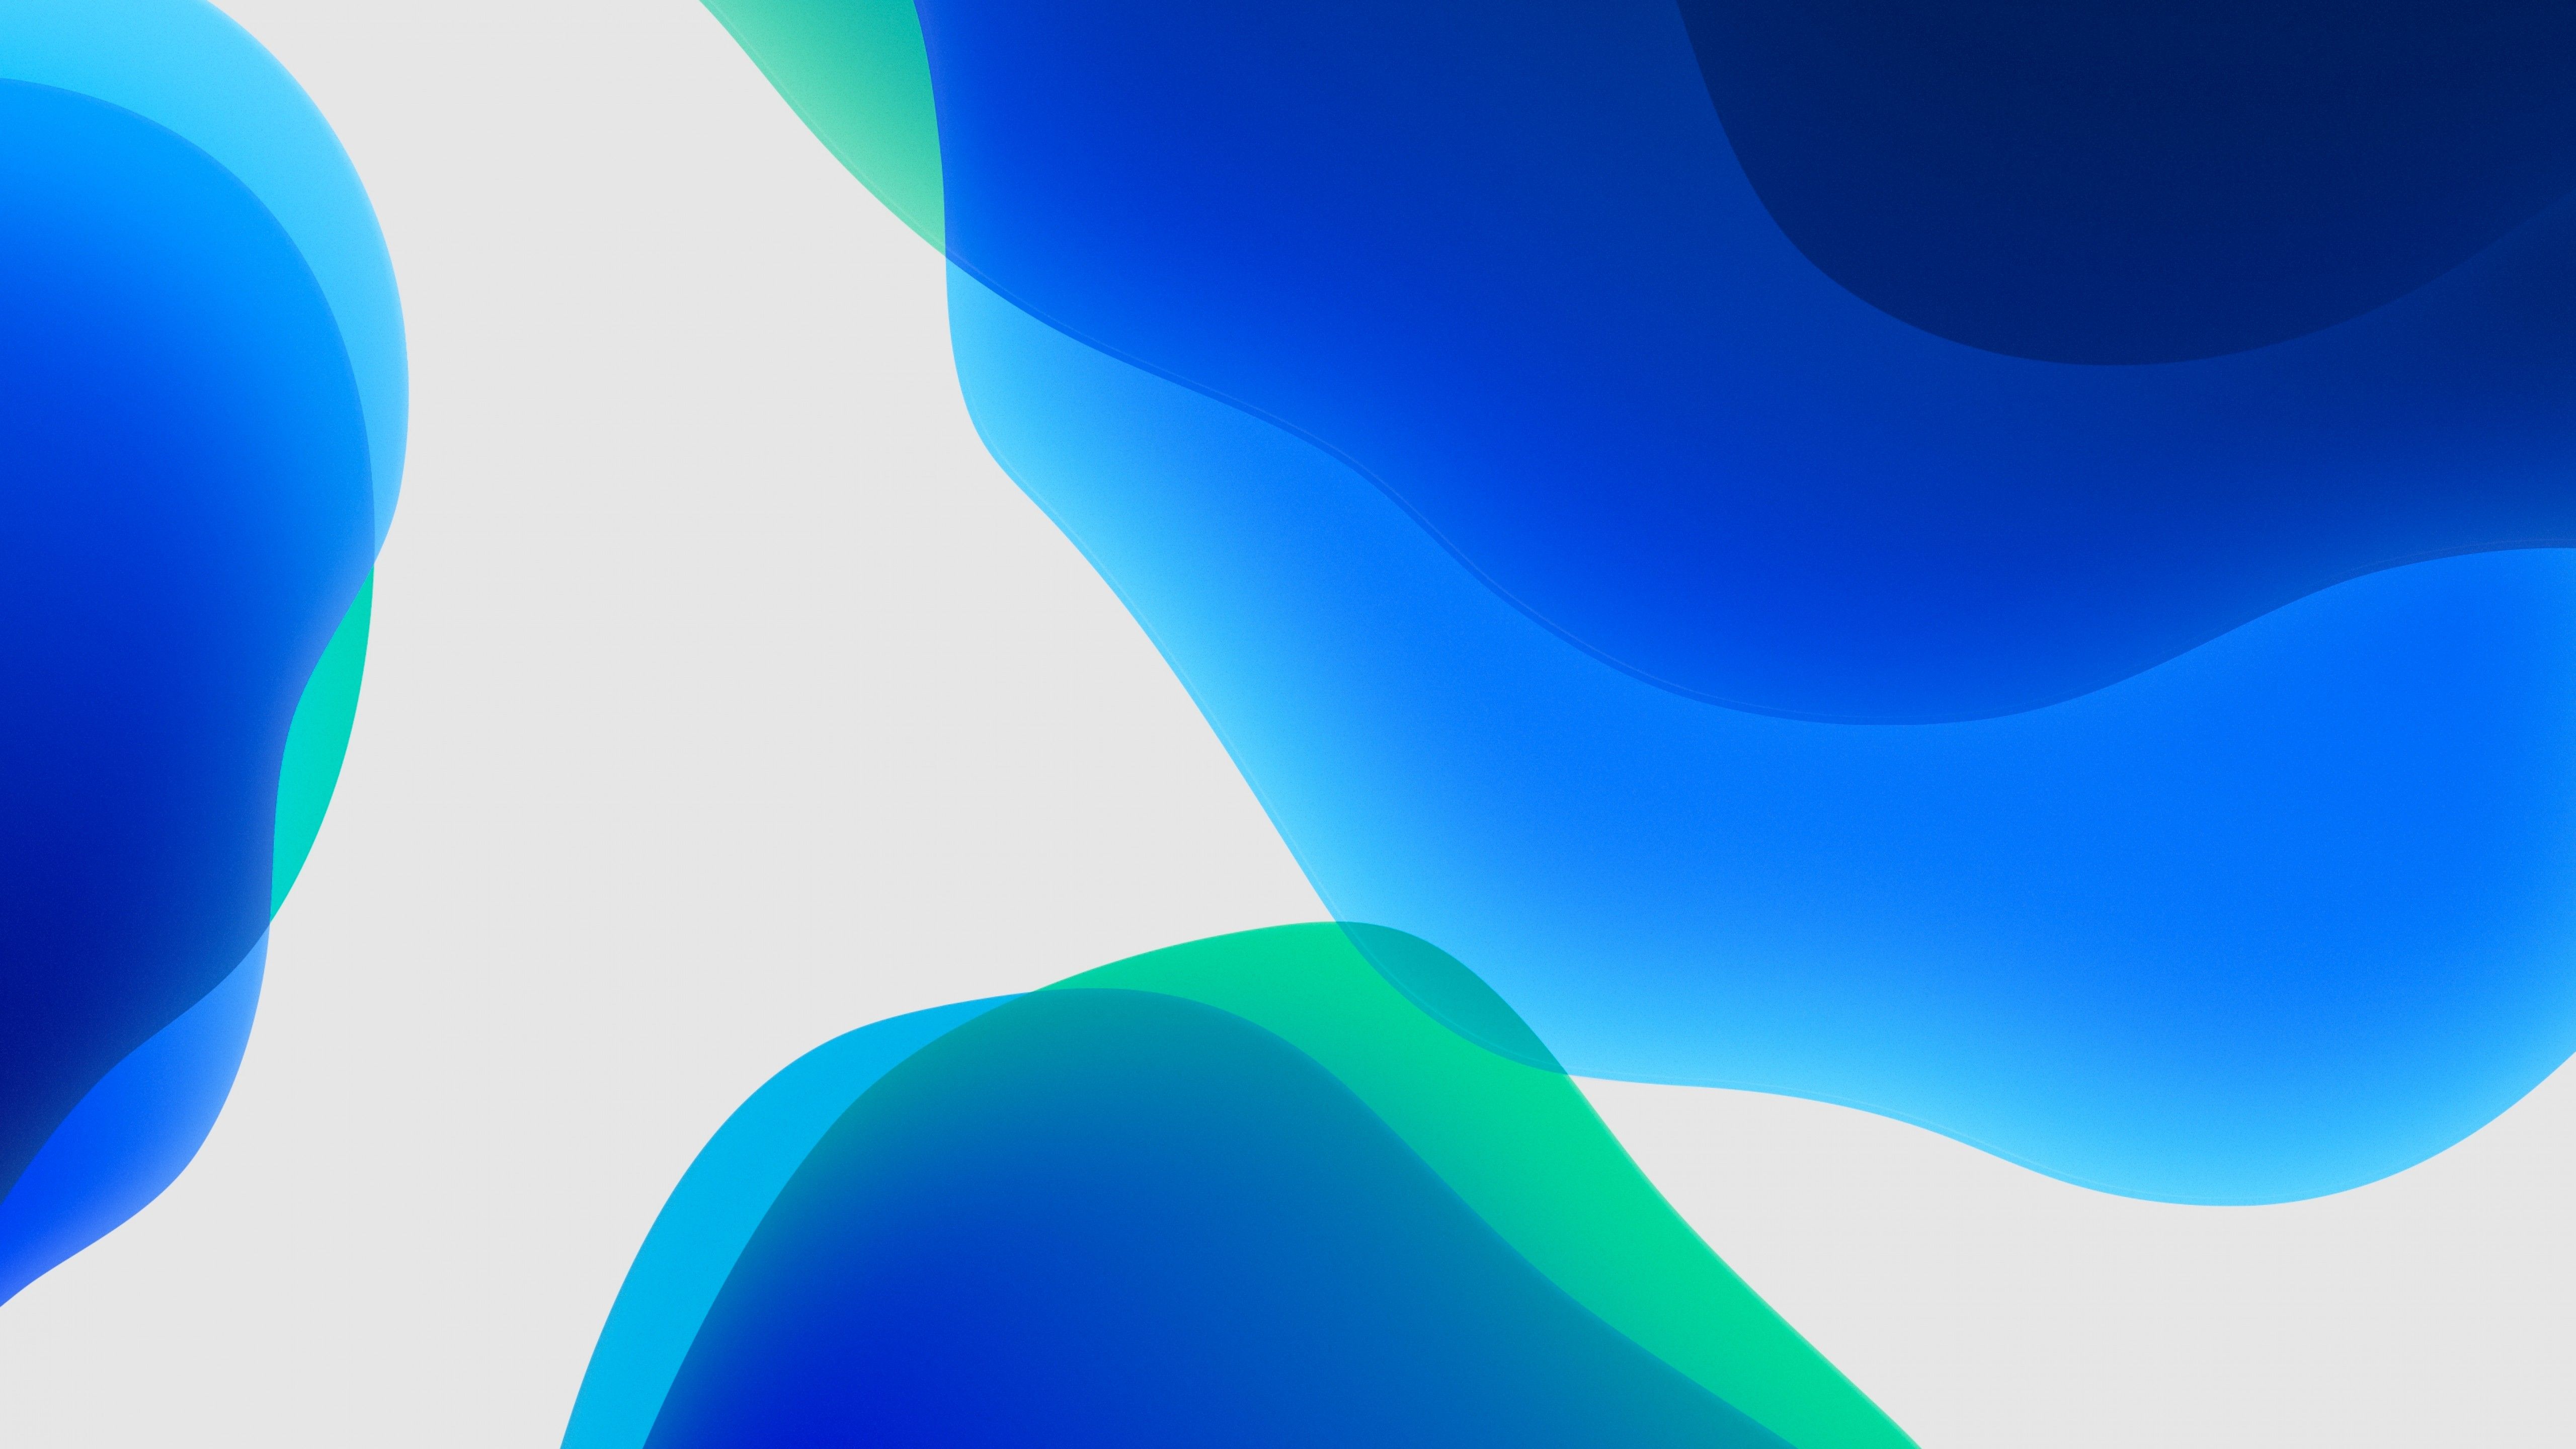 iPadOS 4K Wallpaper, Stock, Blue, White background, iPad, iOS HD, Abstract